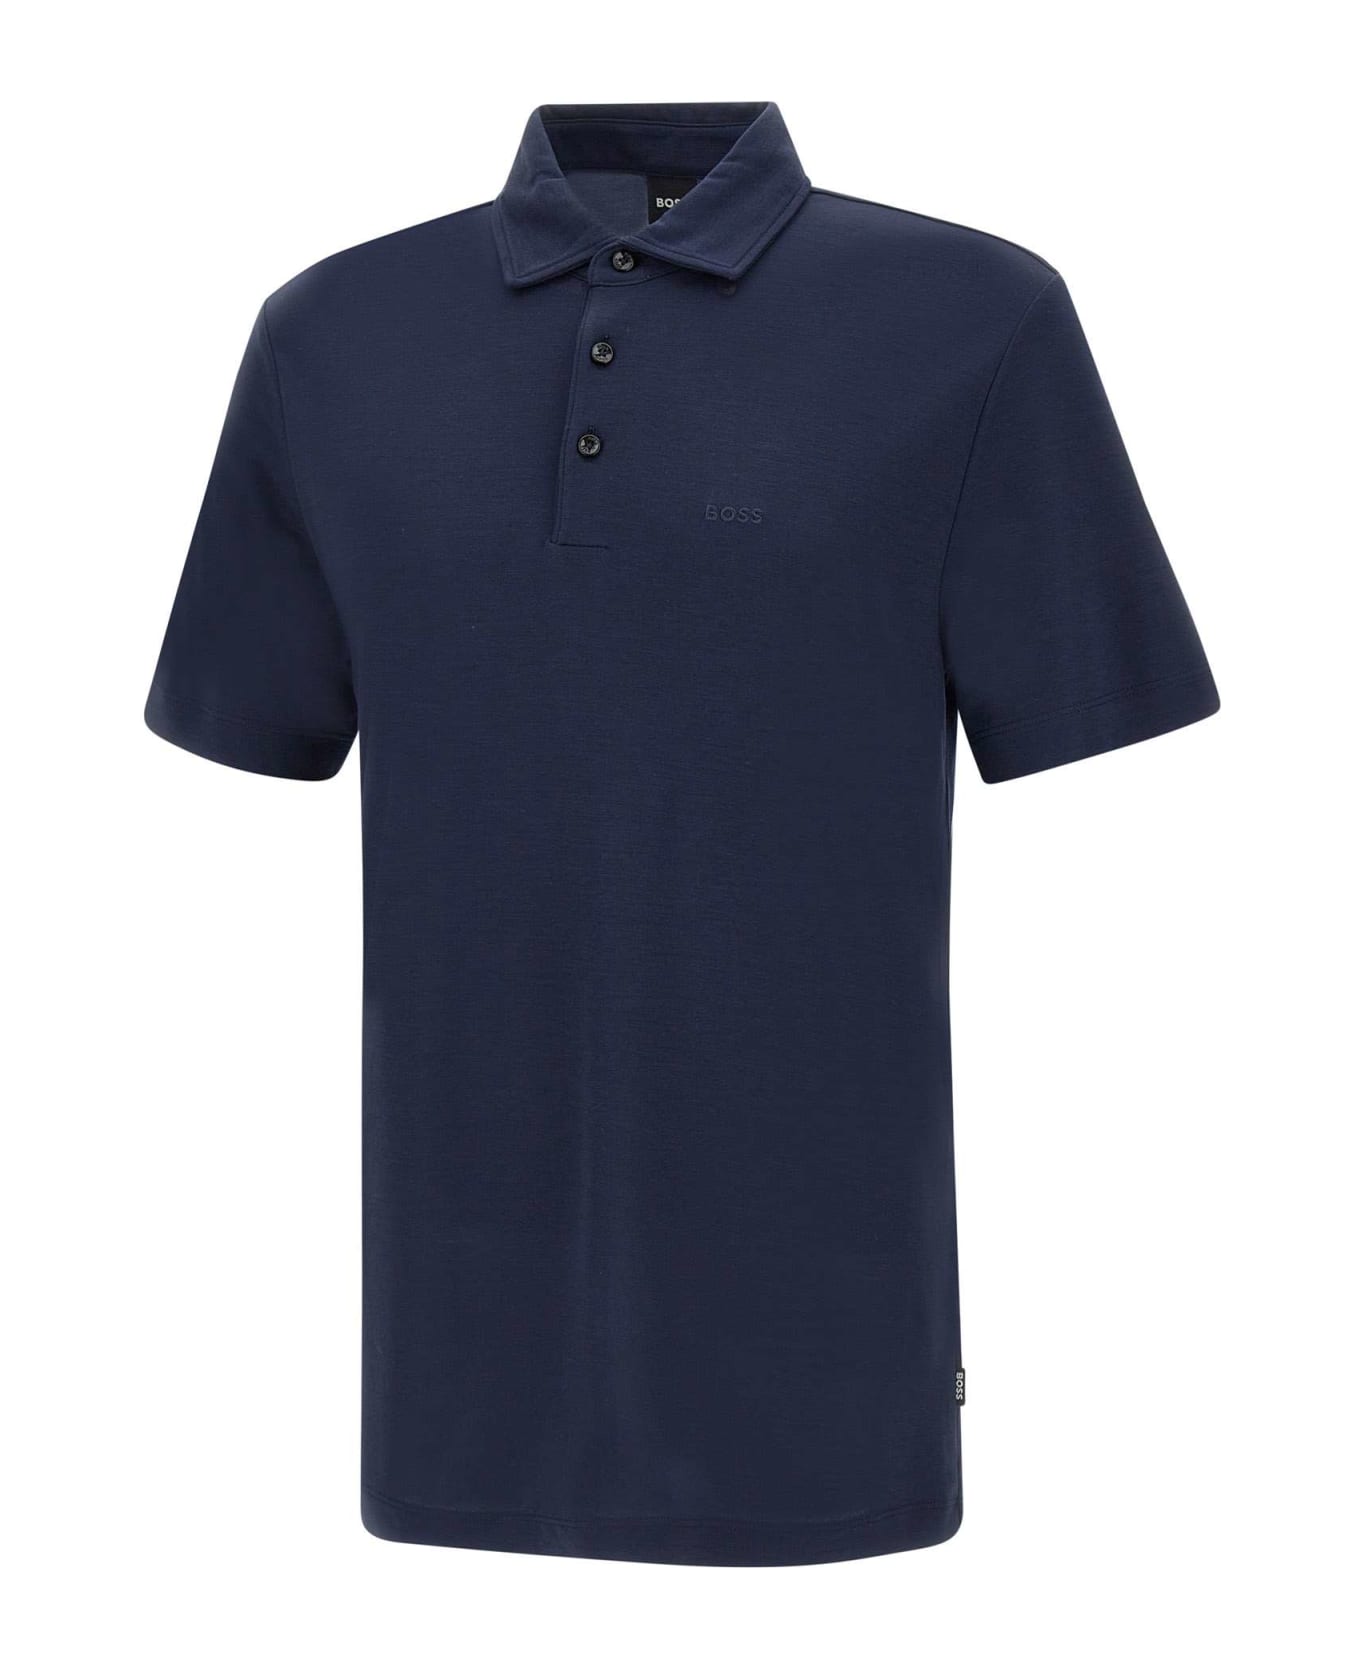 Hugo Boss "press55" Cotton Polo Shirt - BLUE